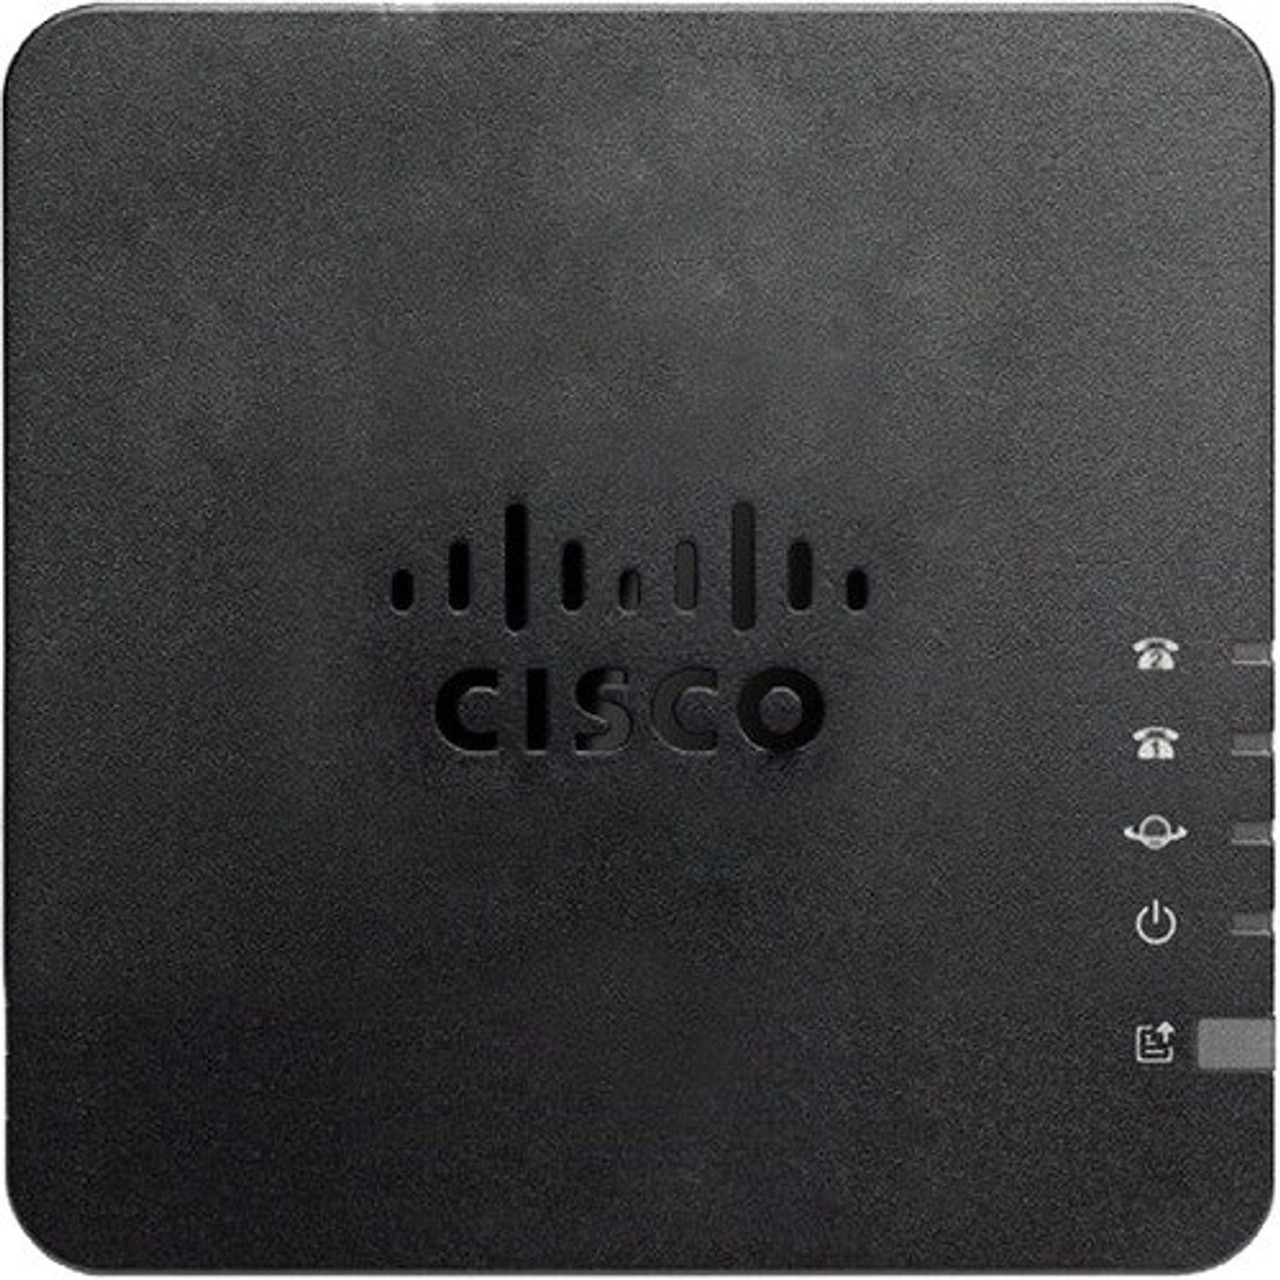 Cisco cp-holster-8821= 8821 Belt Holster